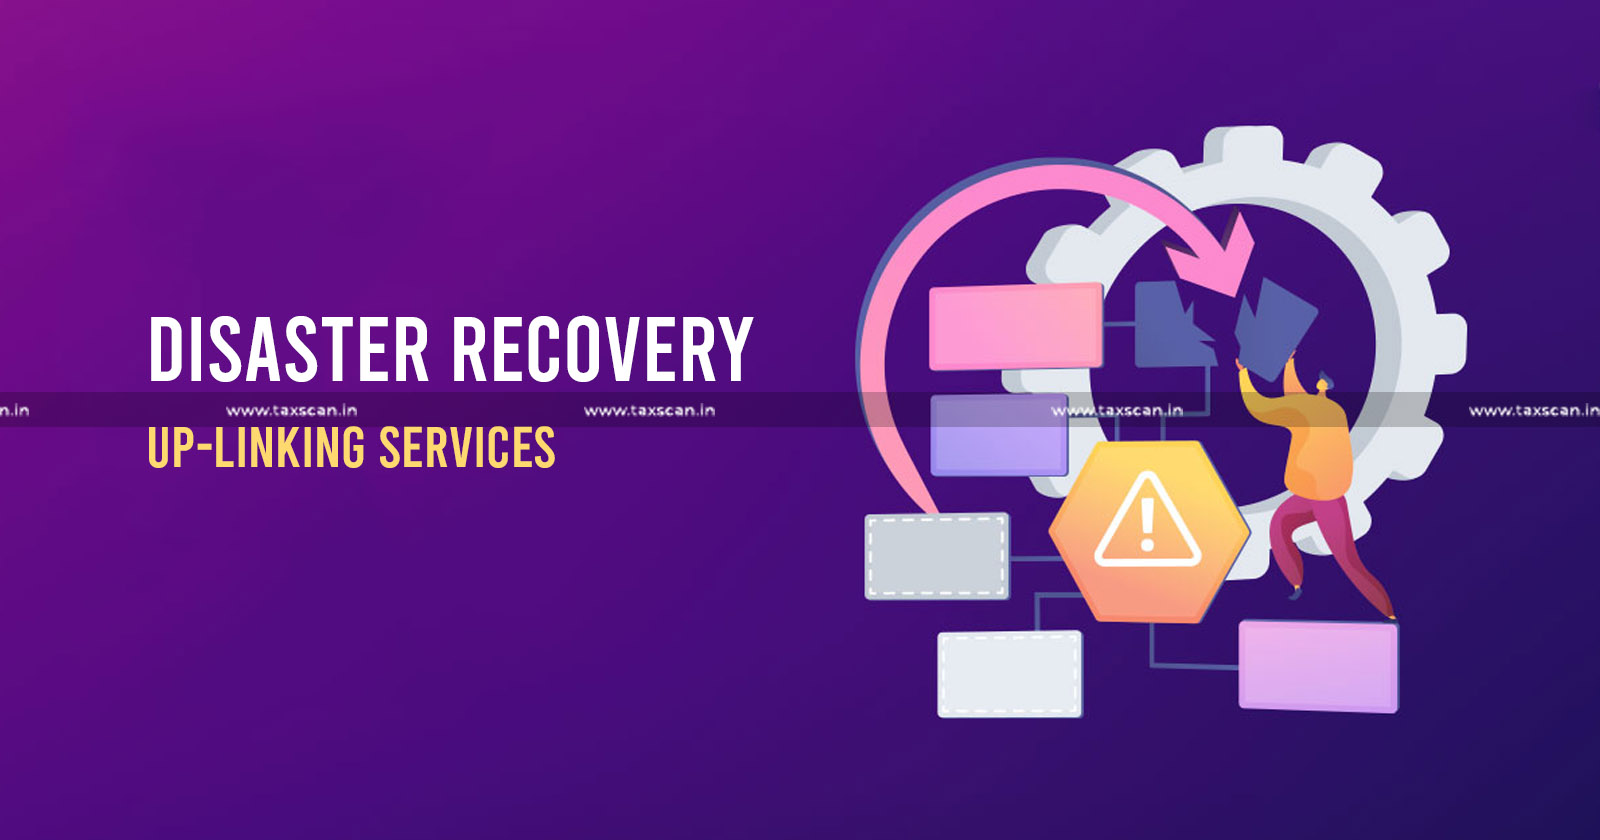 ITAT deletes Addition - Receipts - Disaster Recovery Up-Linking Services - Disaster Recovery - Receipts from Disaster Recovery Up-Linking Services are not Royalty - ITAT - Taxscan